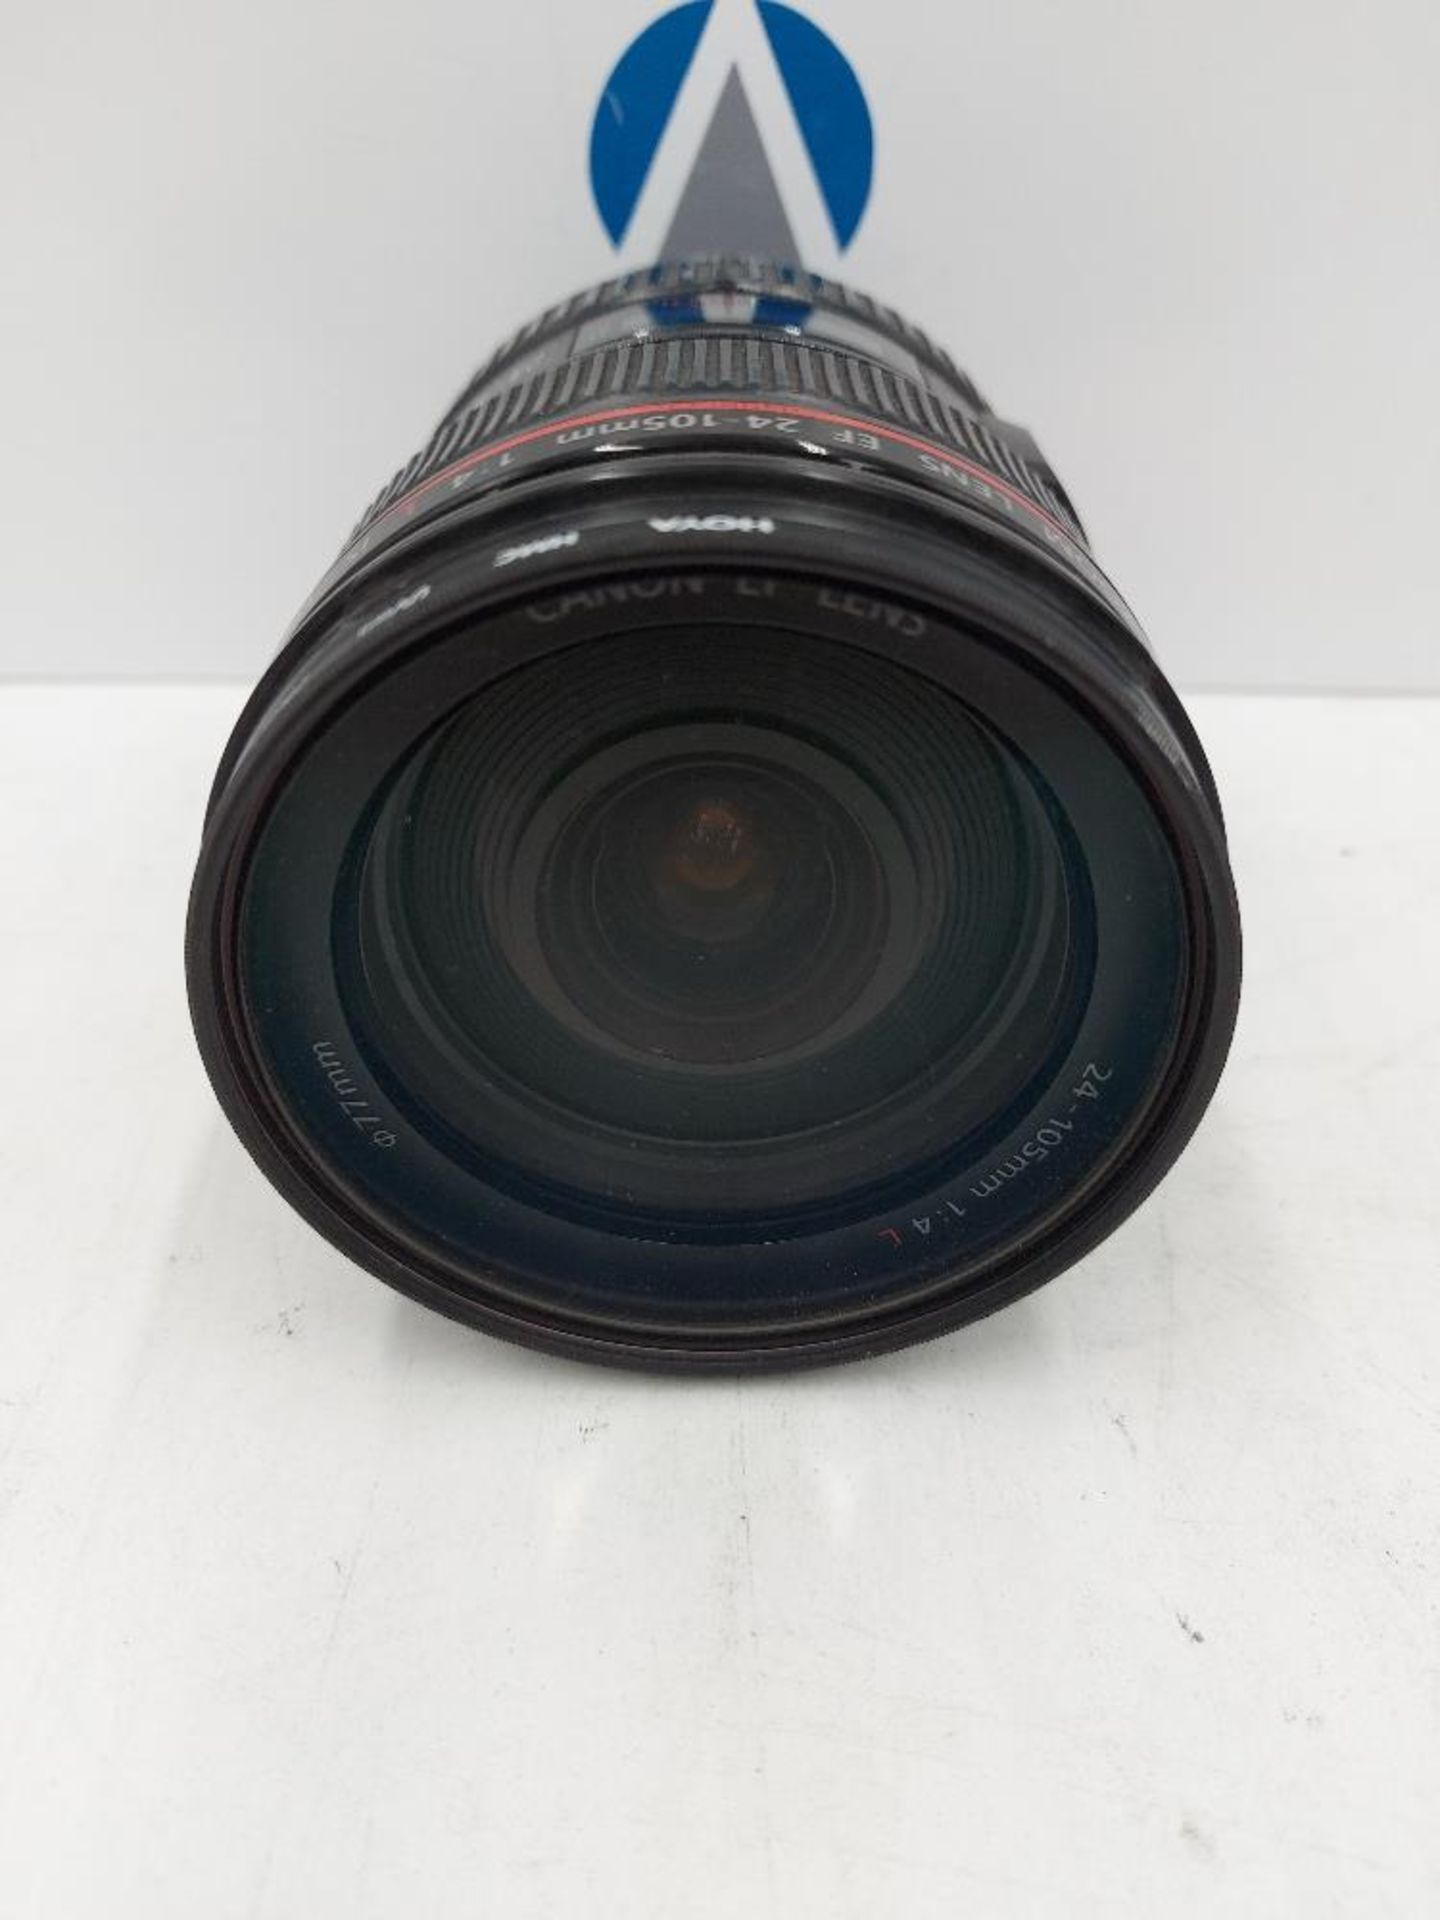 Canon EF 24-105mm 1:4 L IS USM Zoom Lens - Image 2 of 5